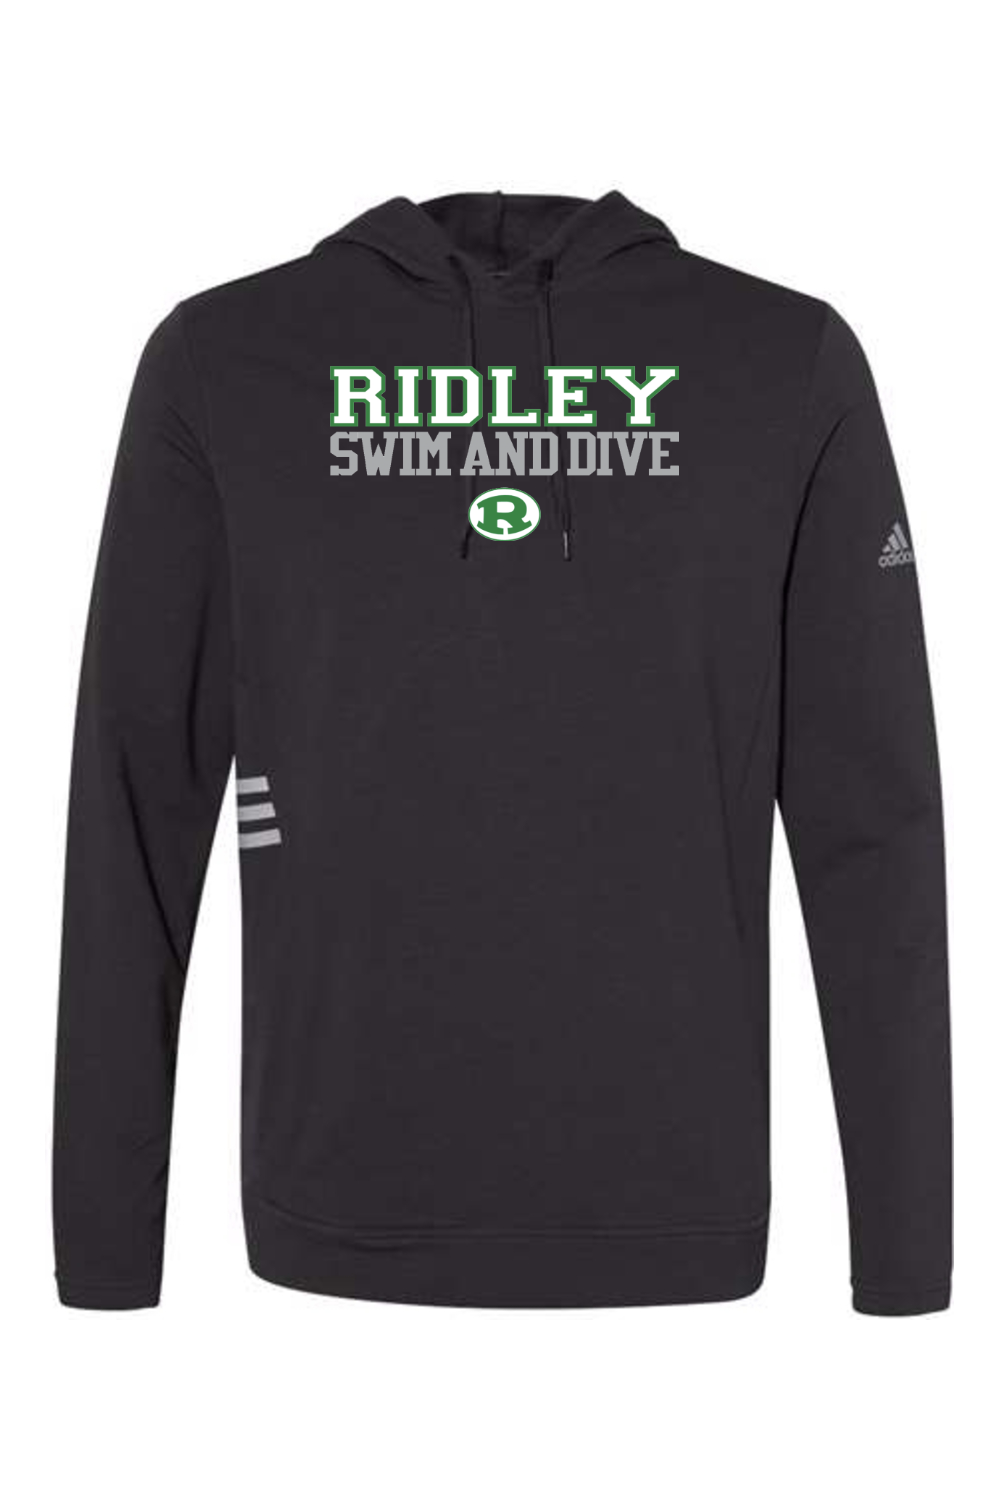 Ridley Swim and Dive Adidas Lightweight Hooded Sweatshirt